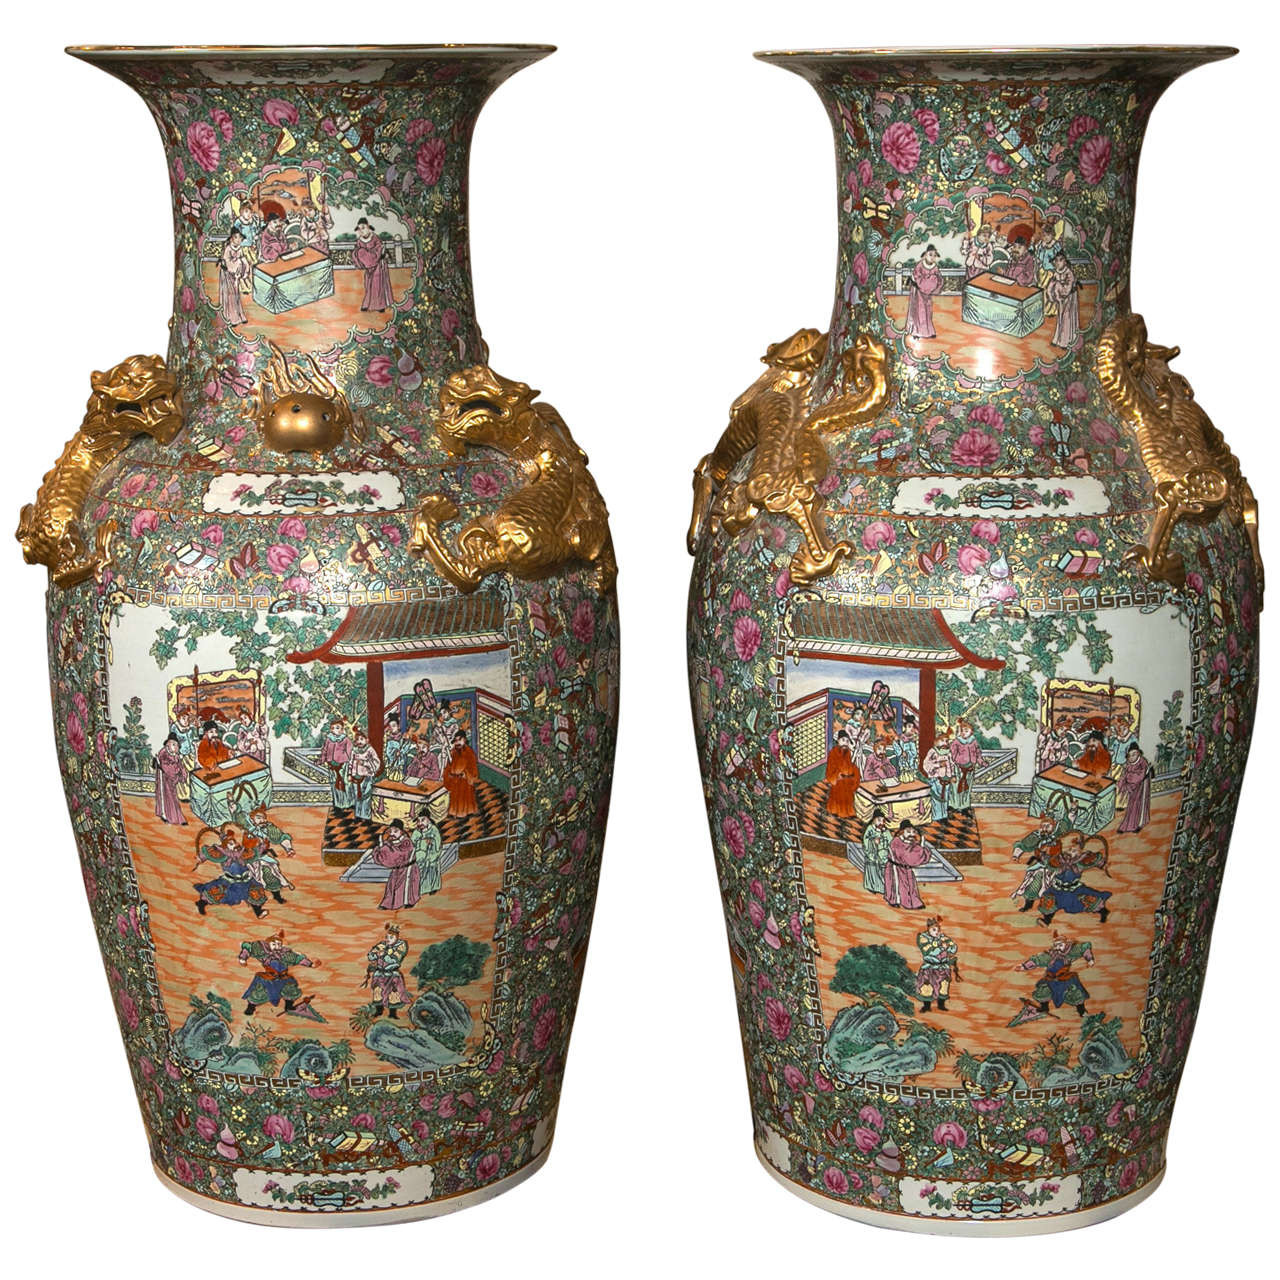 10 Stylish Satsuma Vase Value 2024 free download satsuma vase value of large chinese vases vase and cellar image avorcor com for on now fabulous palatial pair of rose medallion export